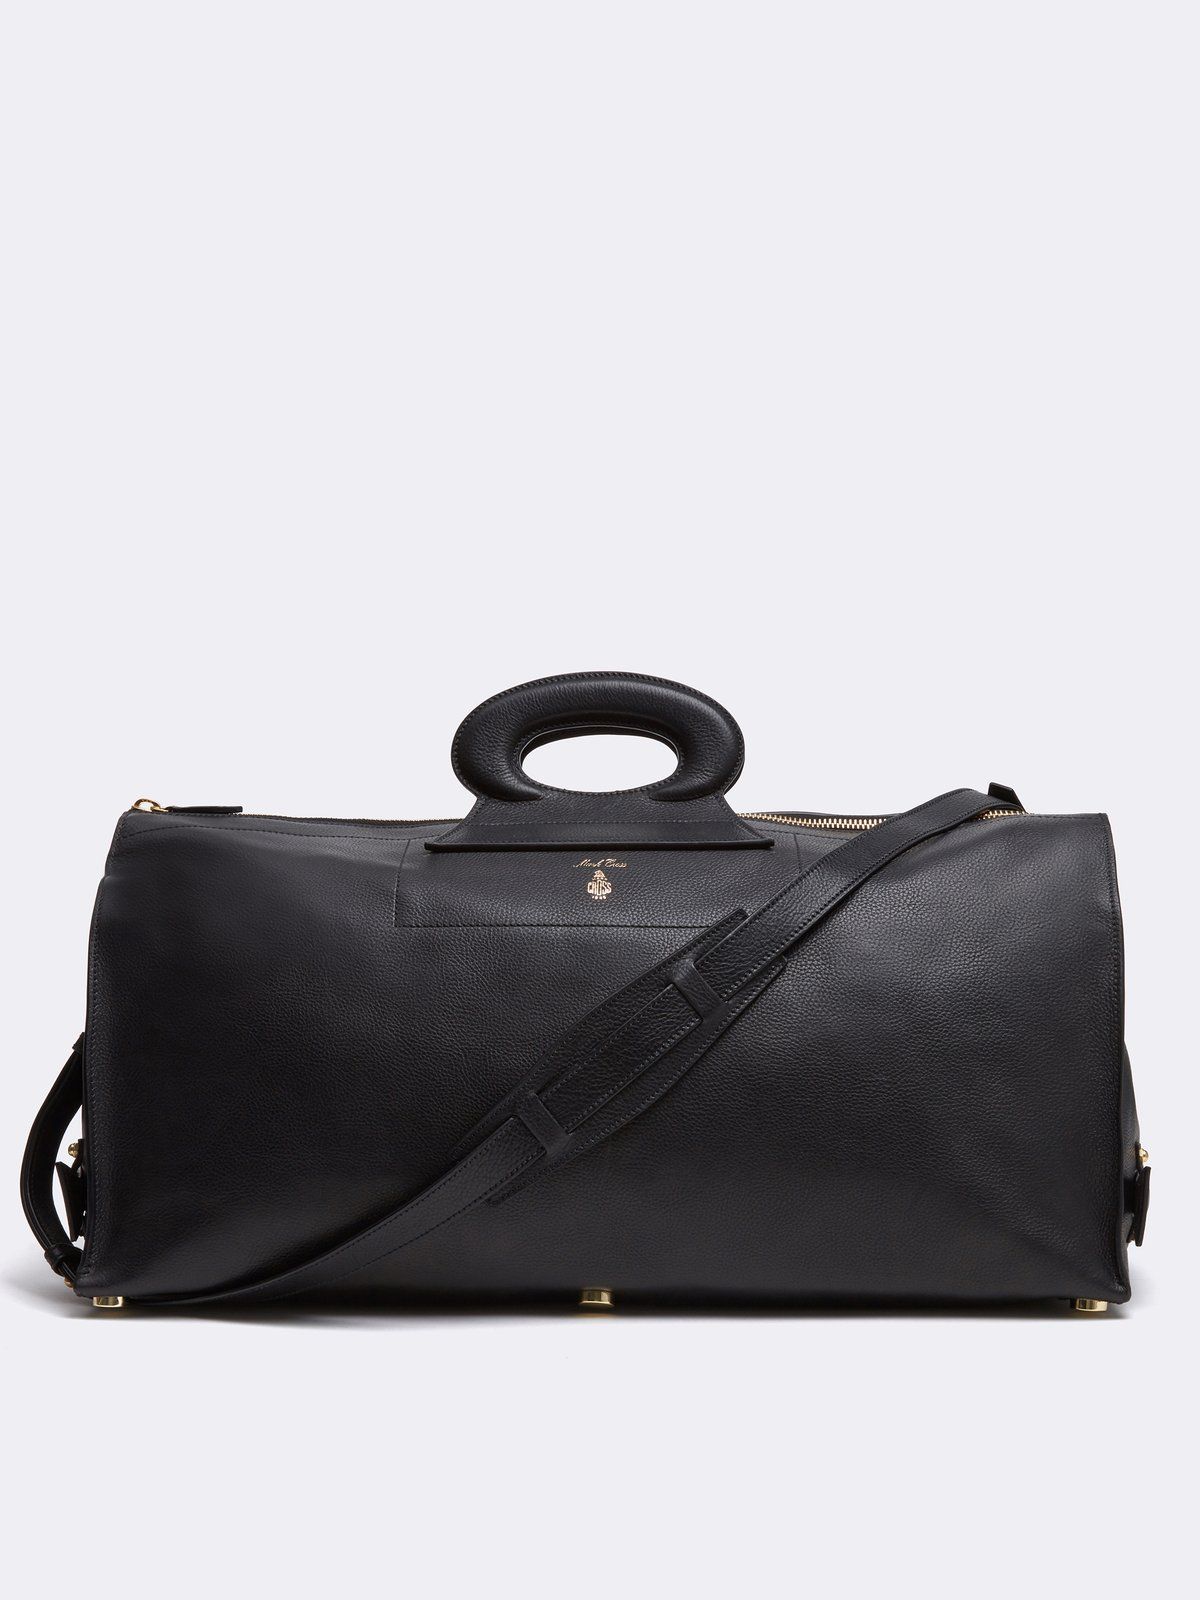 Designer Duffel Bag Weekender Overnight Travel Bag with Matching Wallet LHU093 